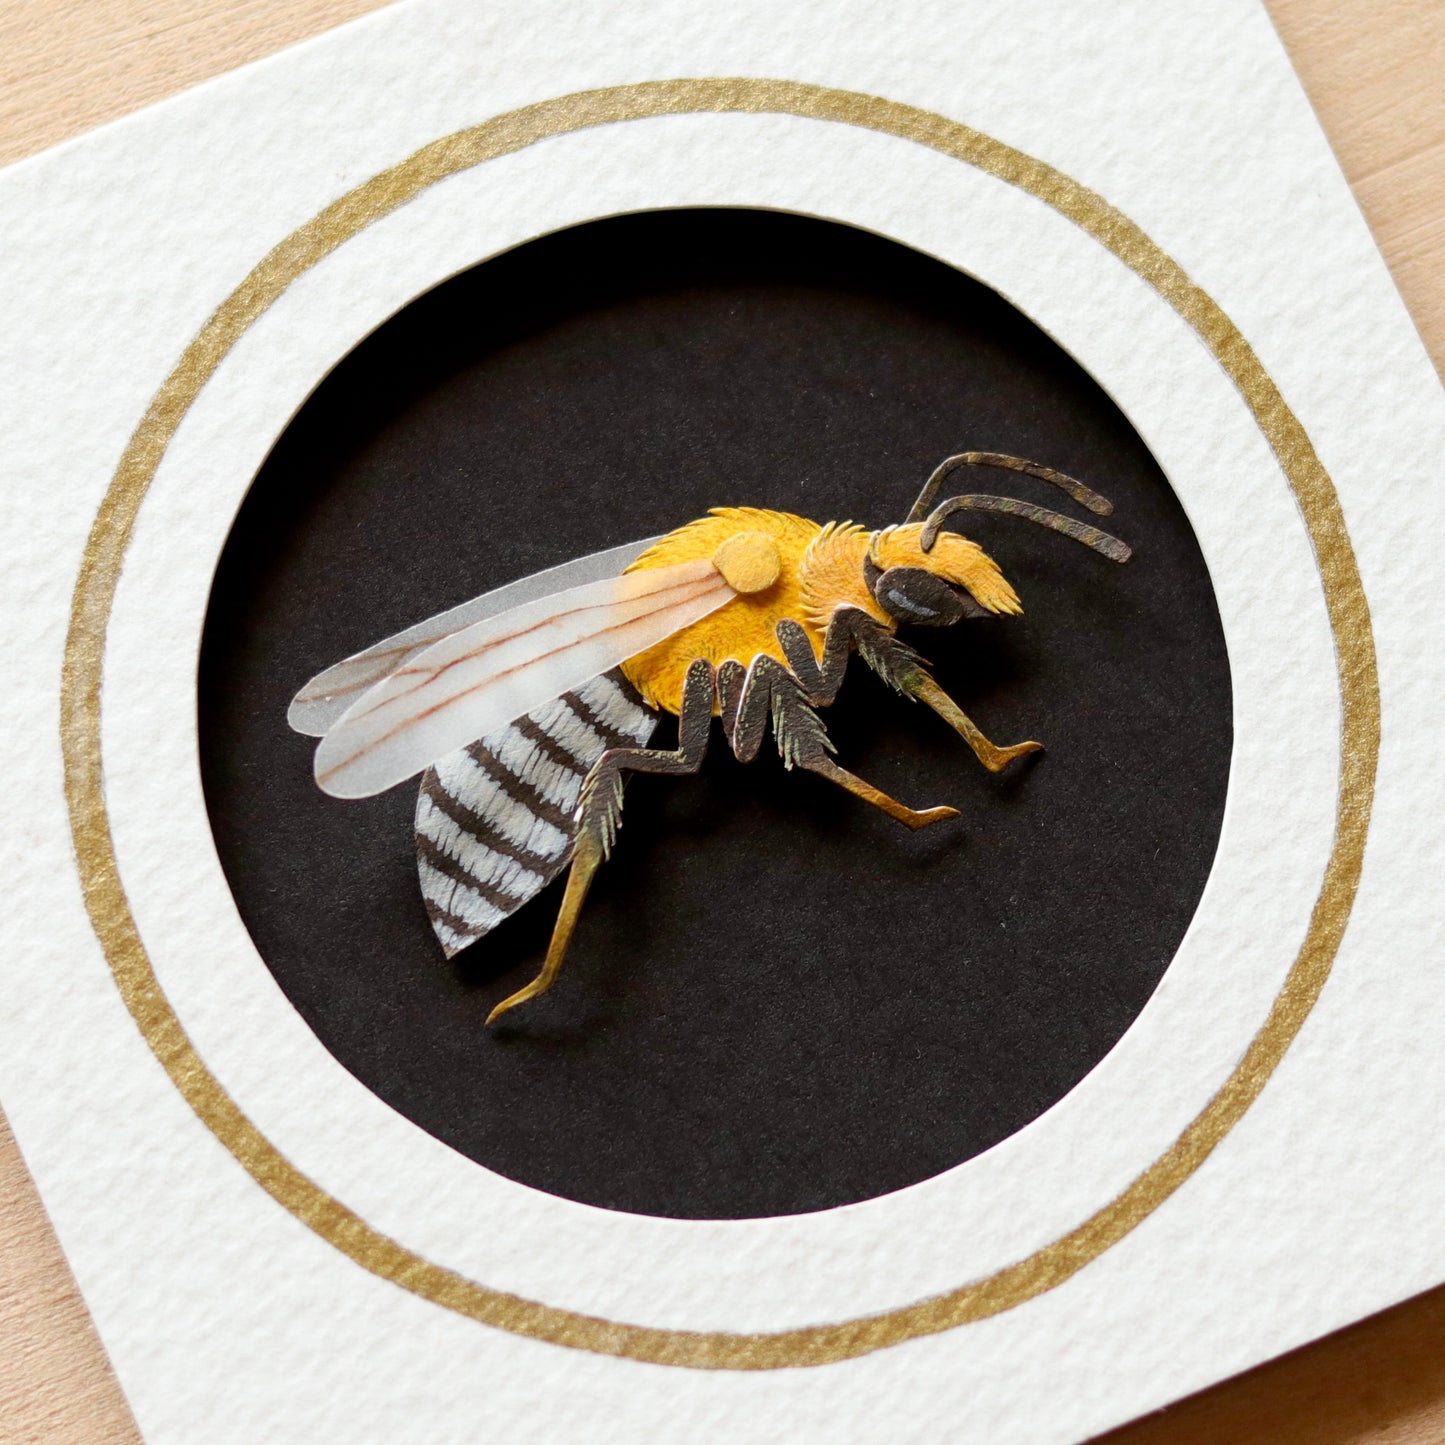 Squash Bee